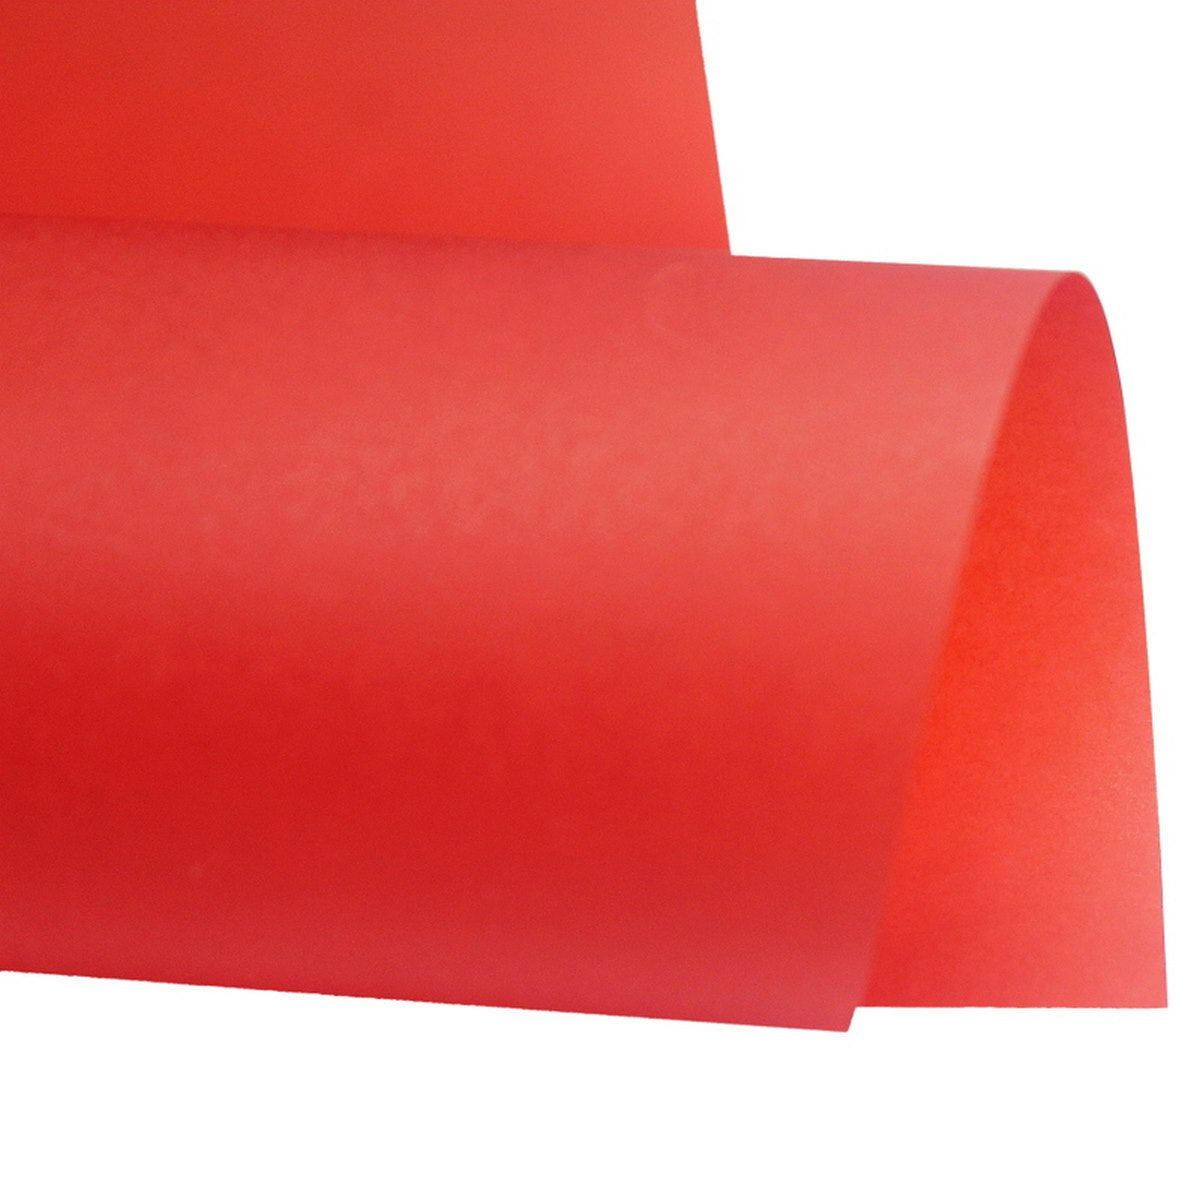 jags-mumbai origami sheet Wellam Paper Plain A4 Red 100gsm